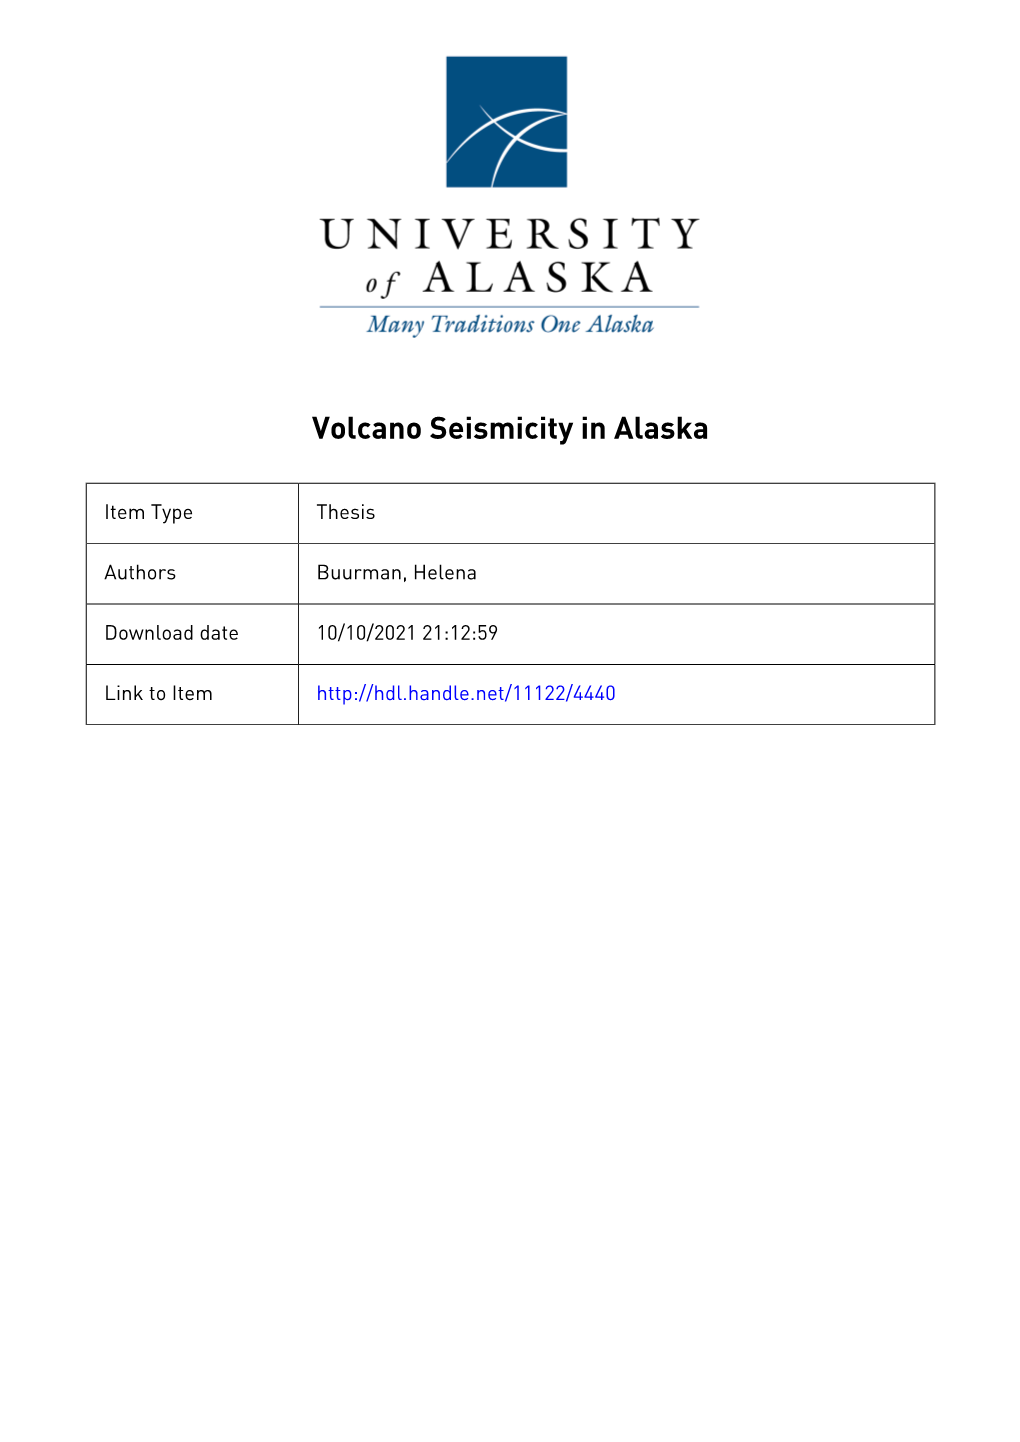 VOLCANO SEISMICITY in ALASKA by Helena Buurman